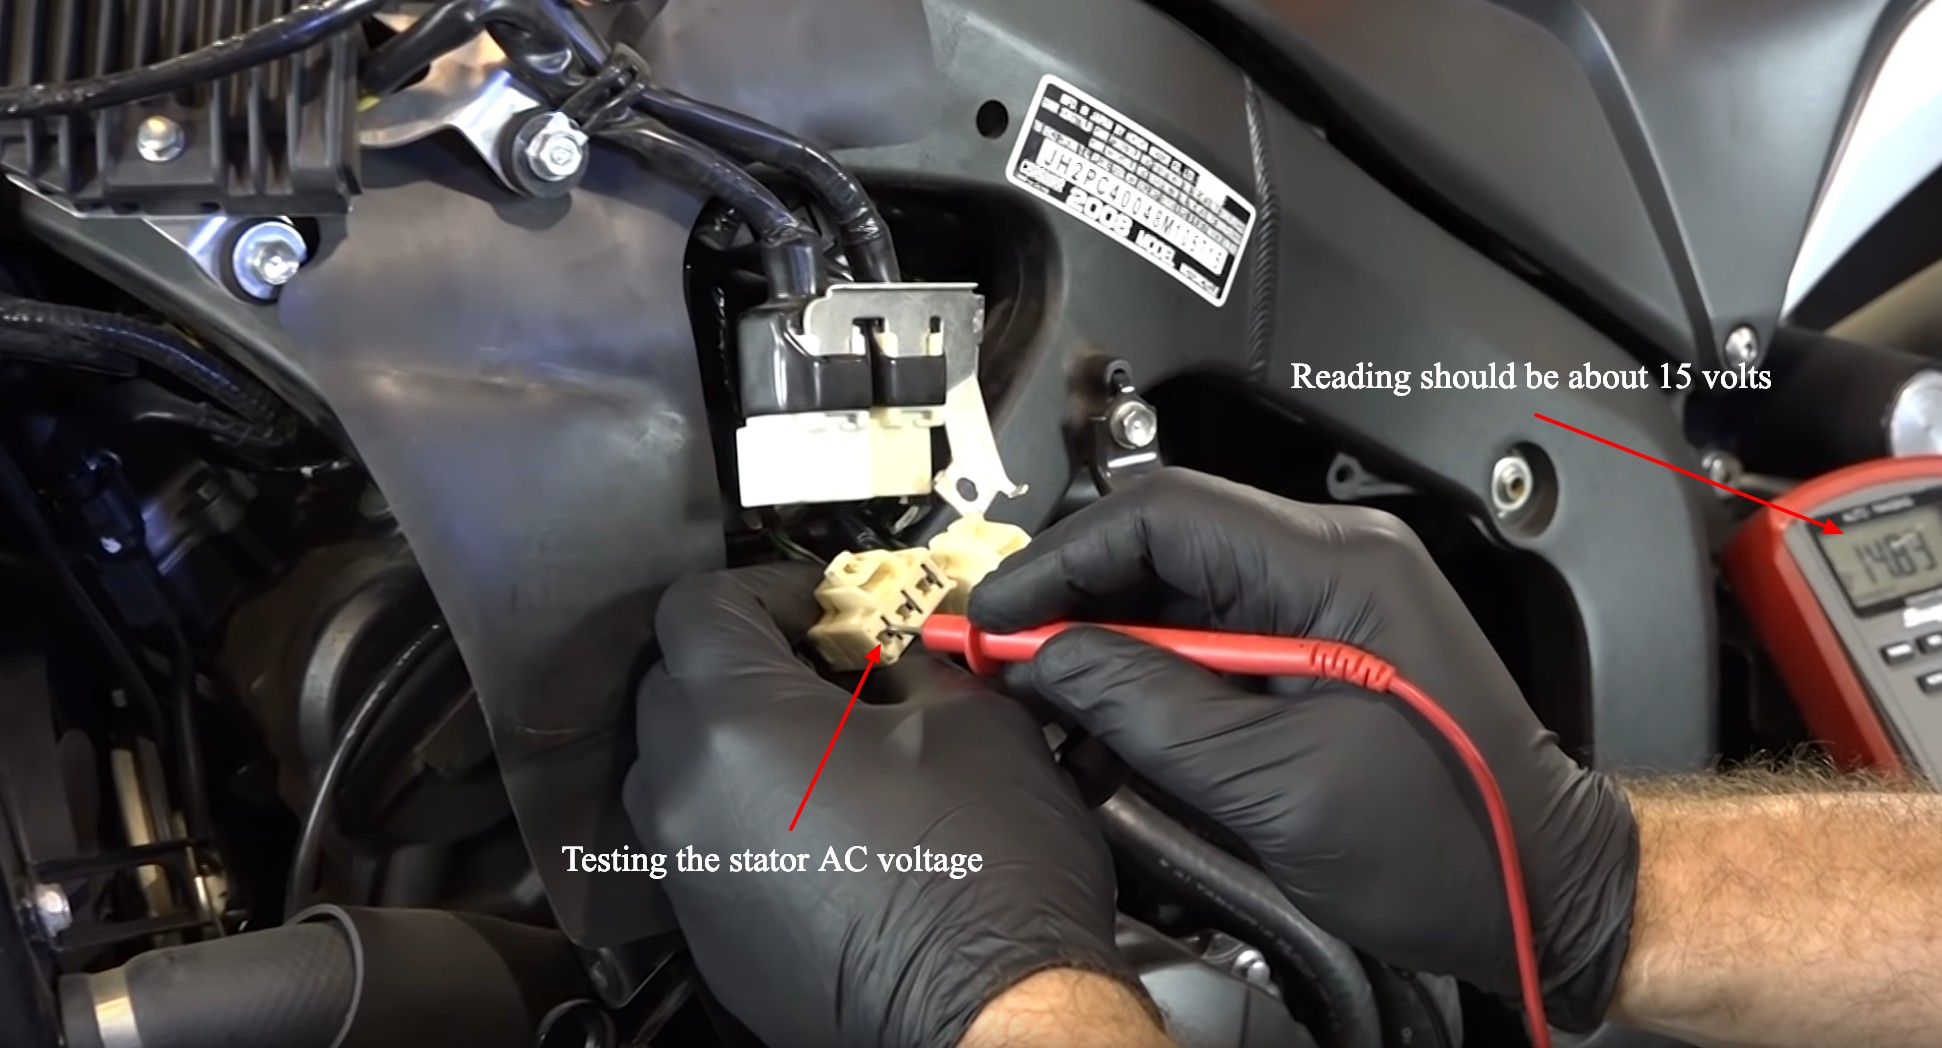 Honda CBR 600 charging system testing